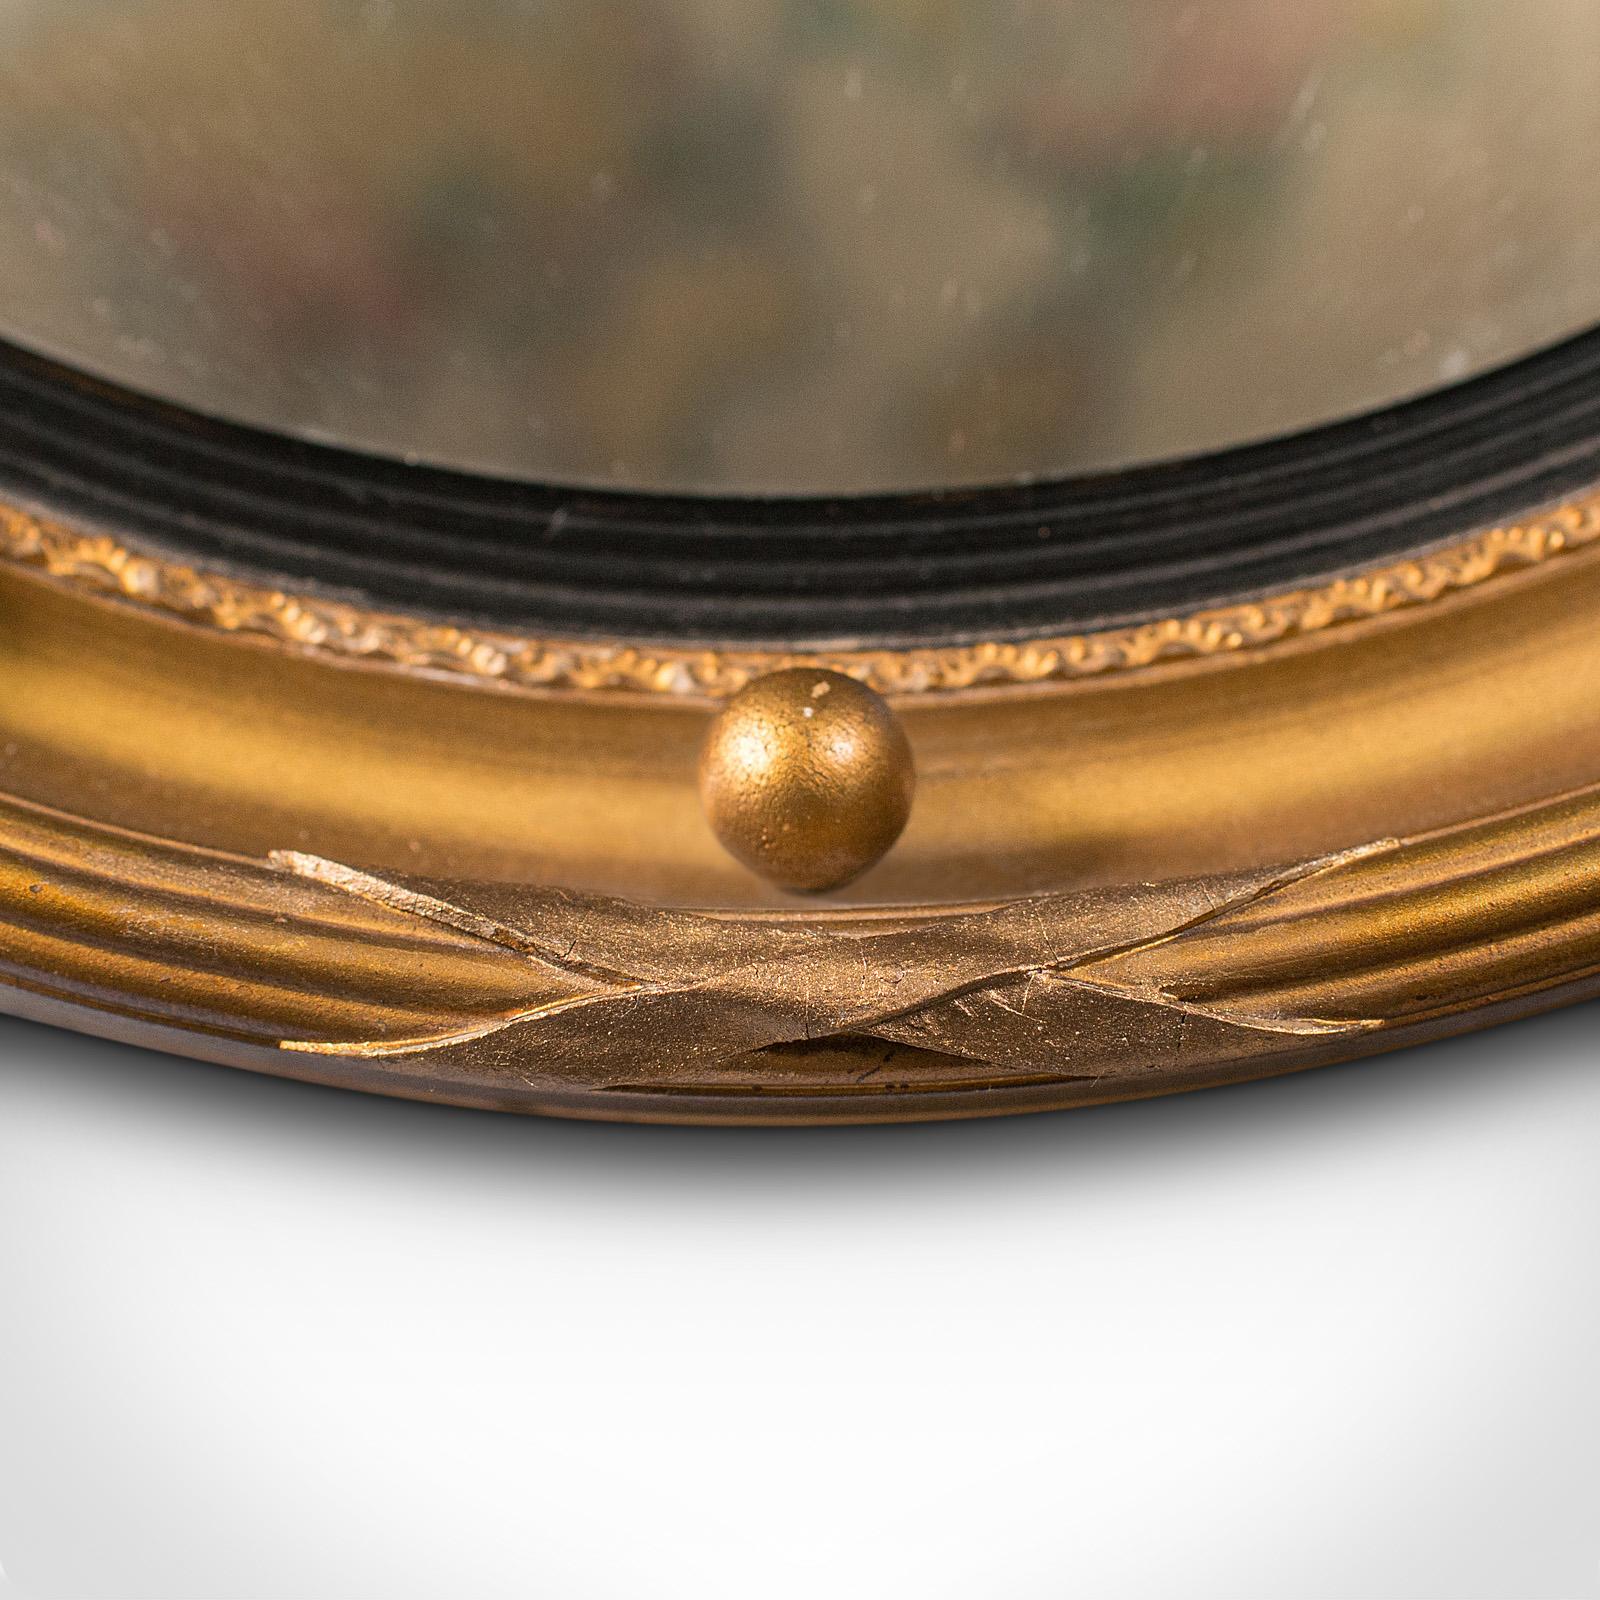 20th Century Vintage Porthole Mirror, English, Decorative, Hall, Lounge, Regency Revival For Sale